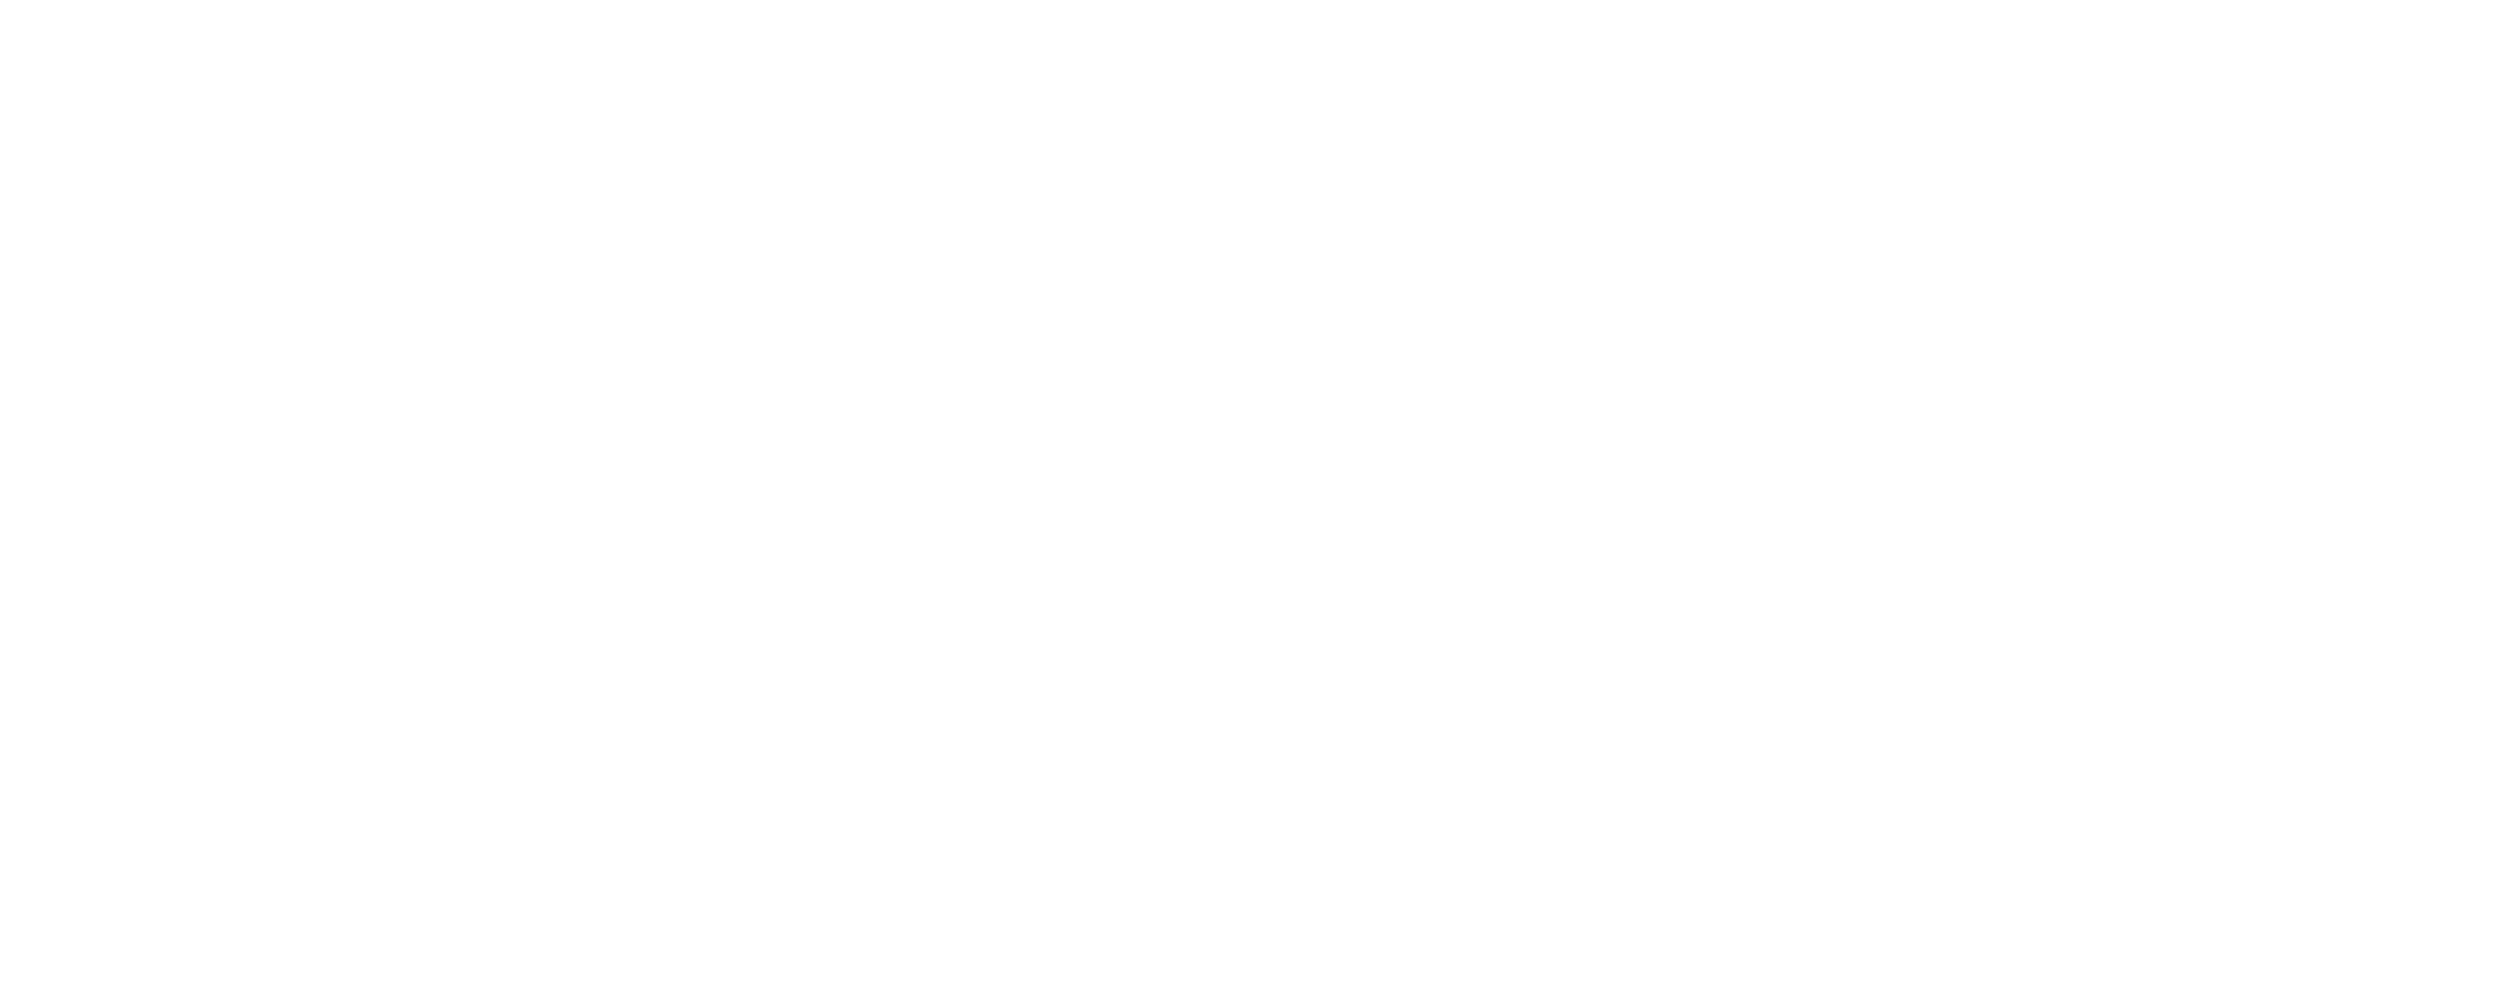 Culture Ireland